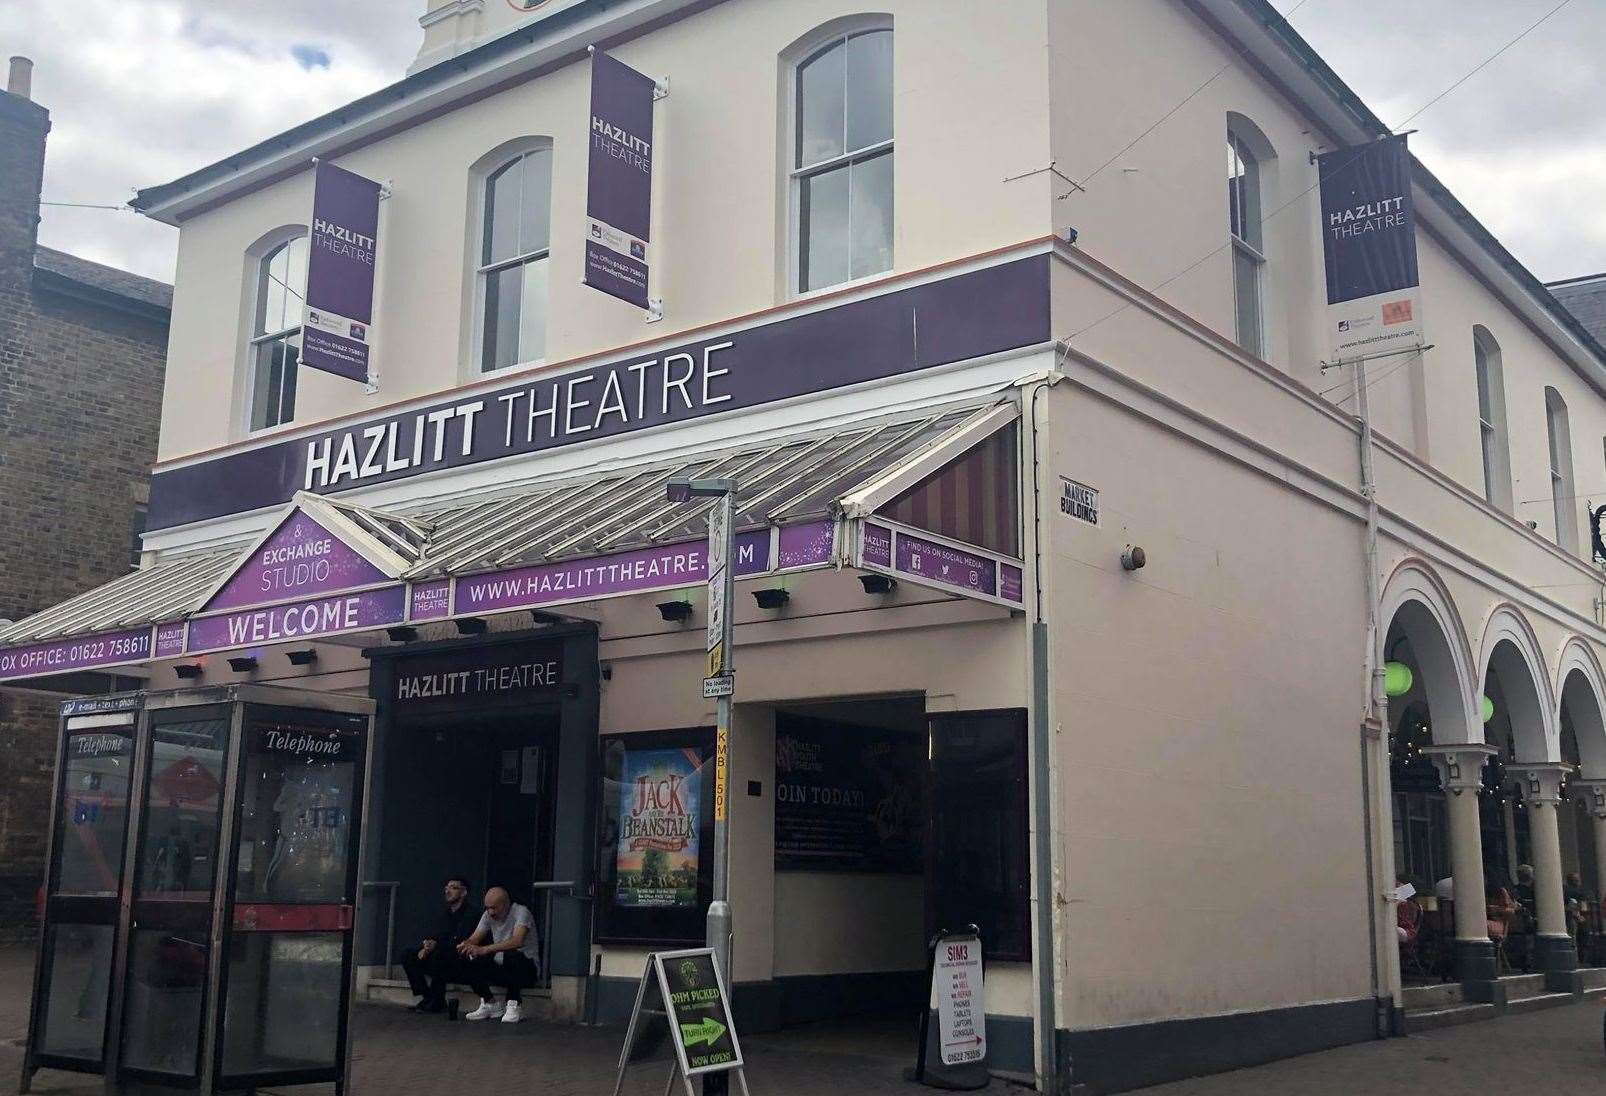 Hazlitt Theatre in Earl Street, Maidstone